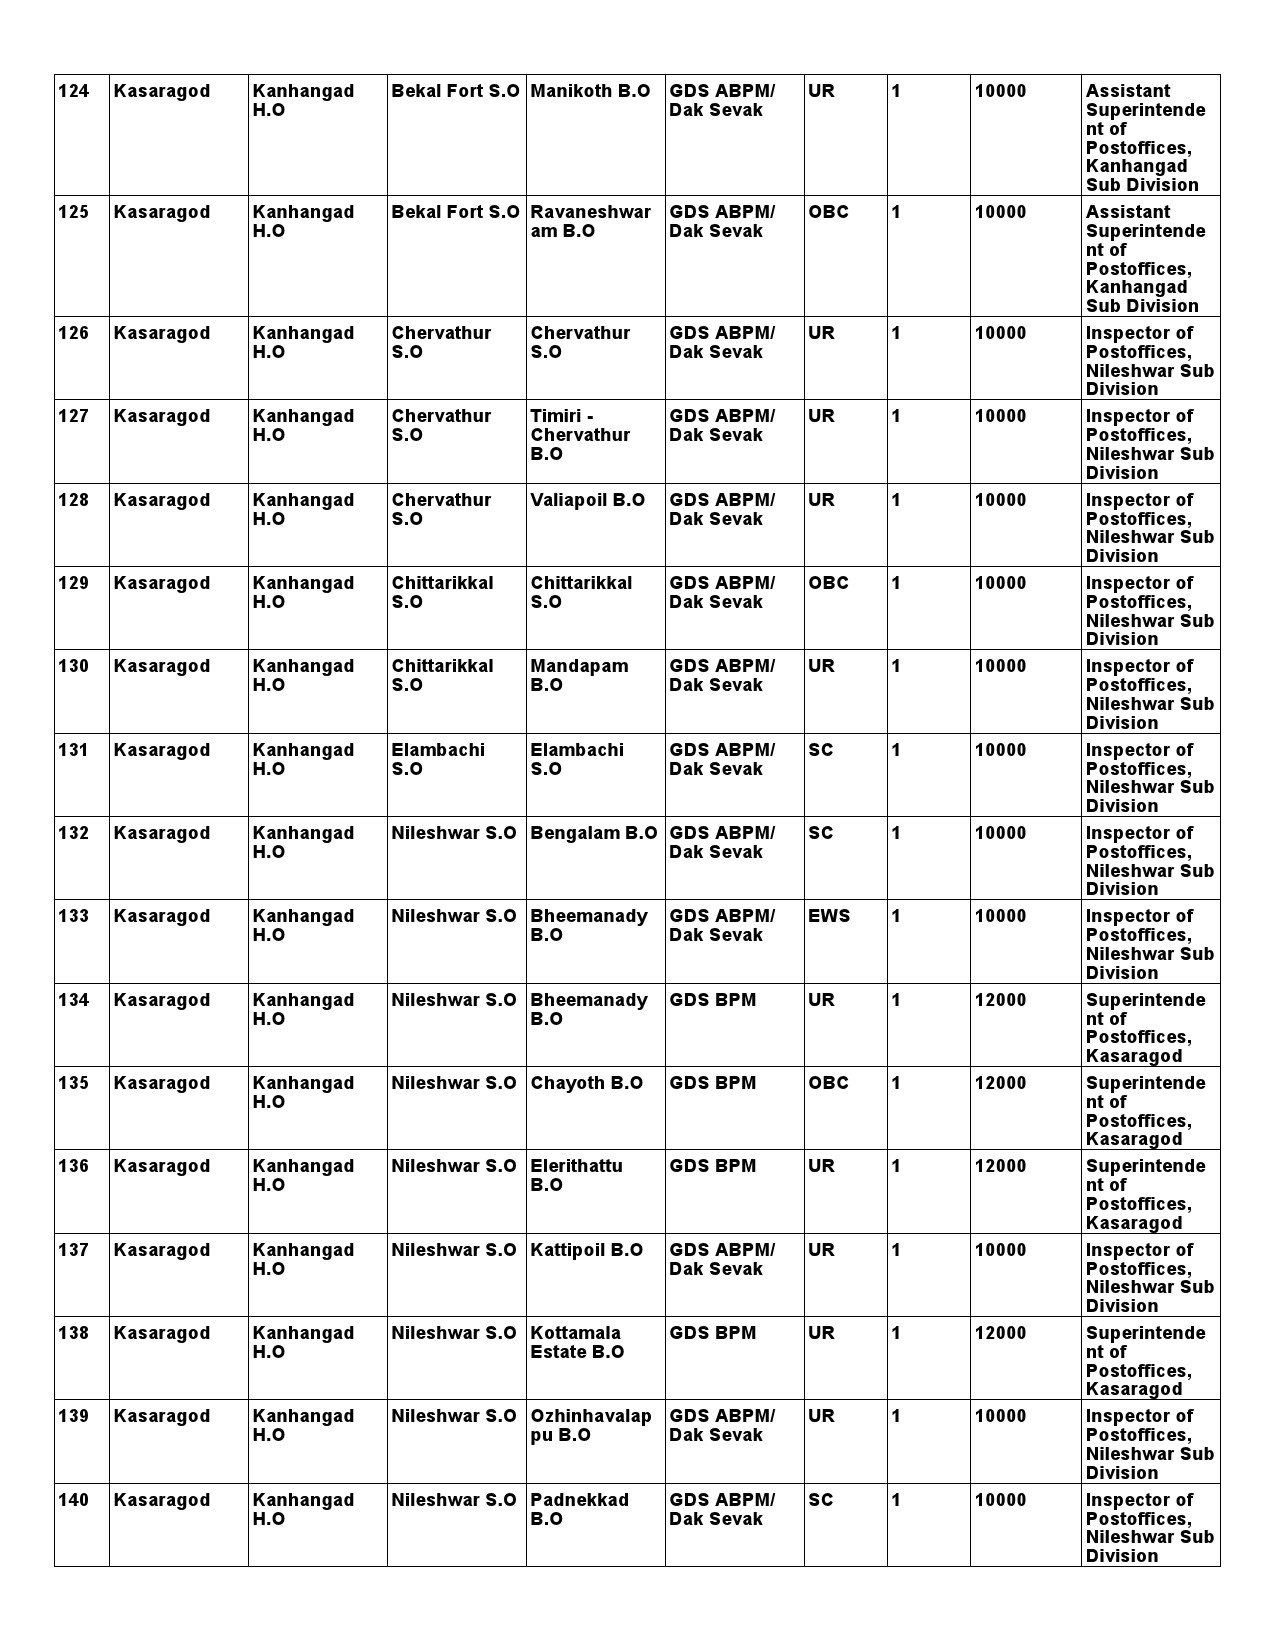 Kerala Postal Circle GDS Recruitment 2021 notification - Notification Image 25